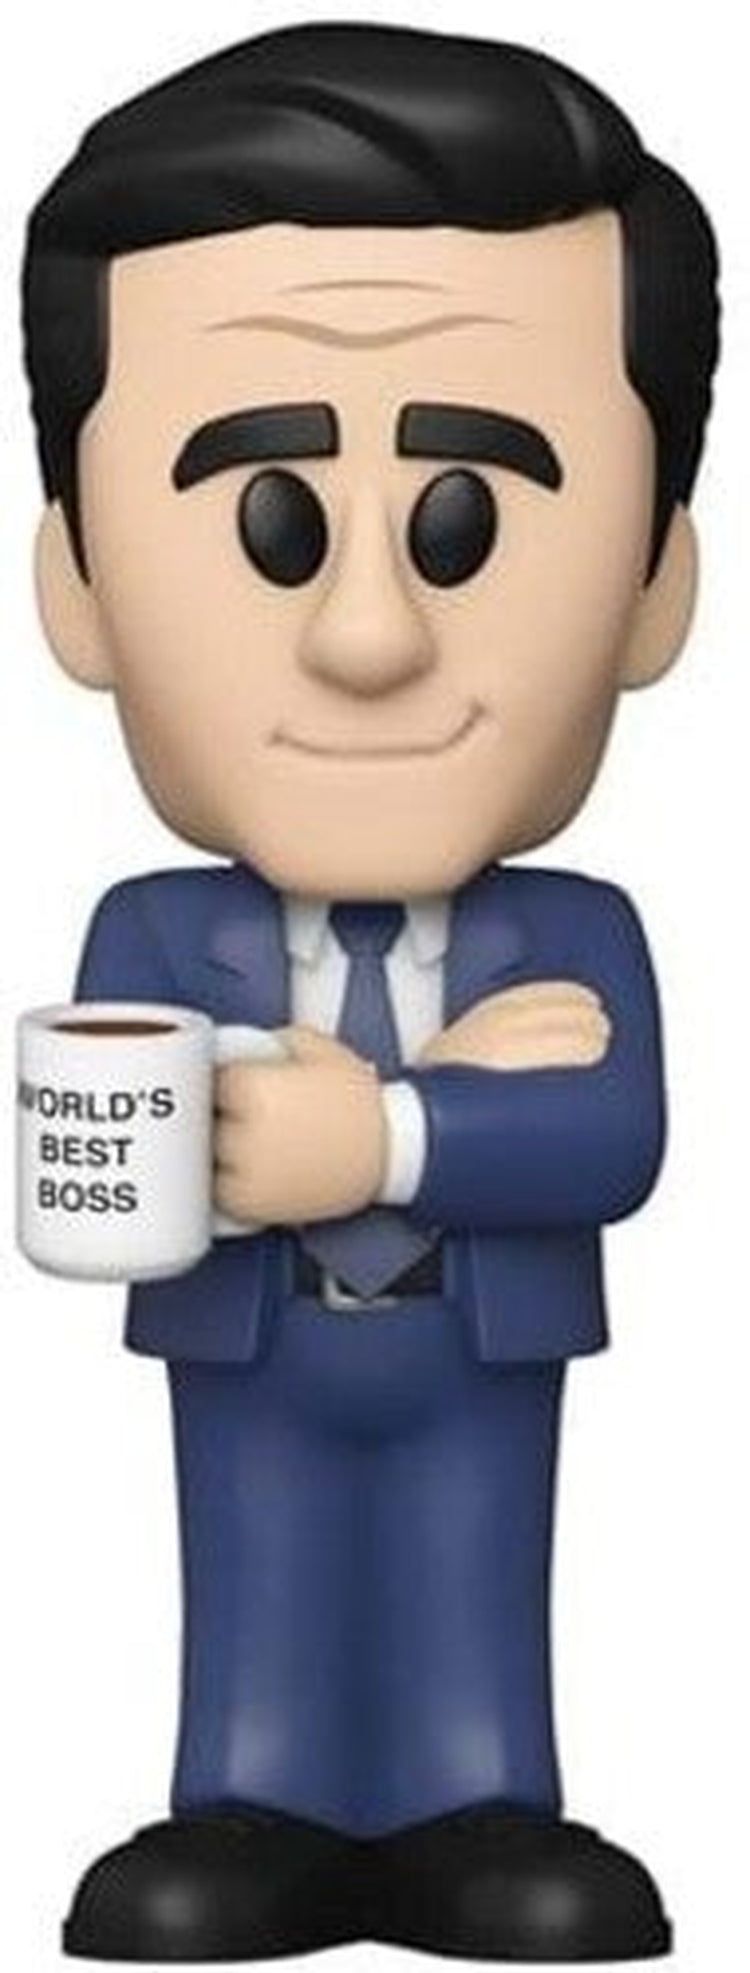 FUNKO VINYL SODA: The Office - Michael Best Boss (Styles May Vary)